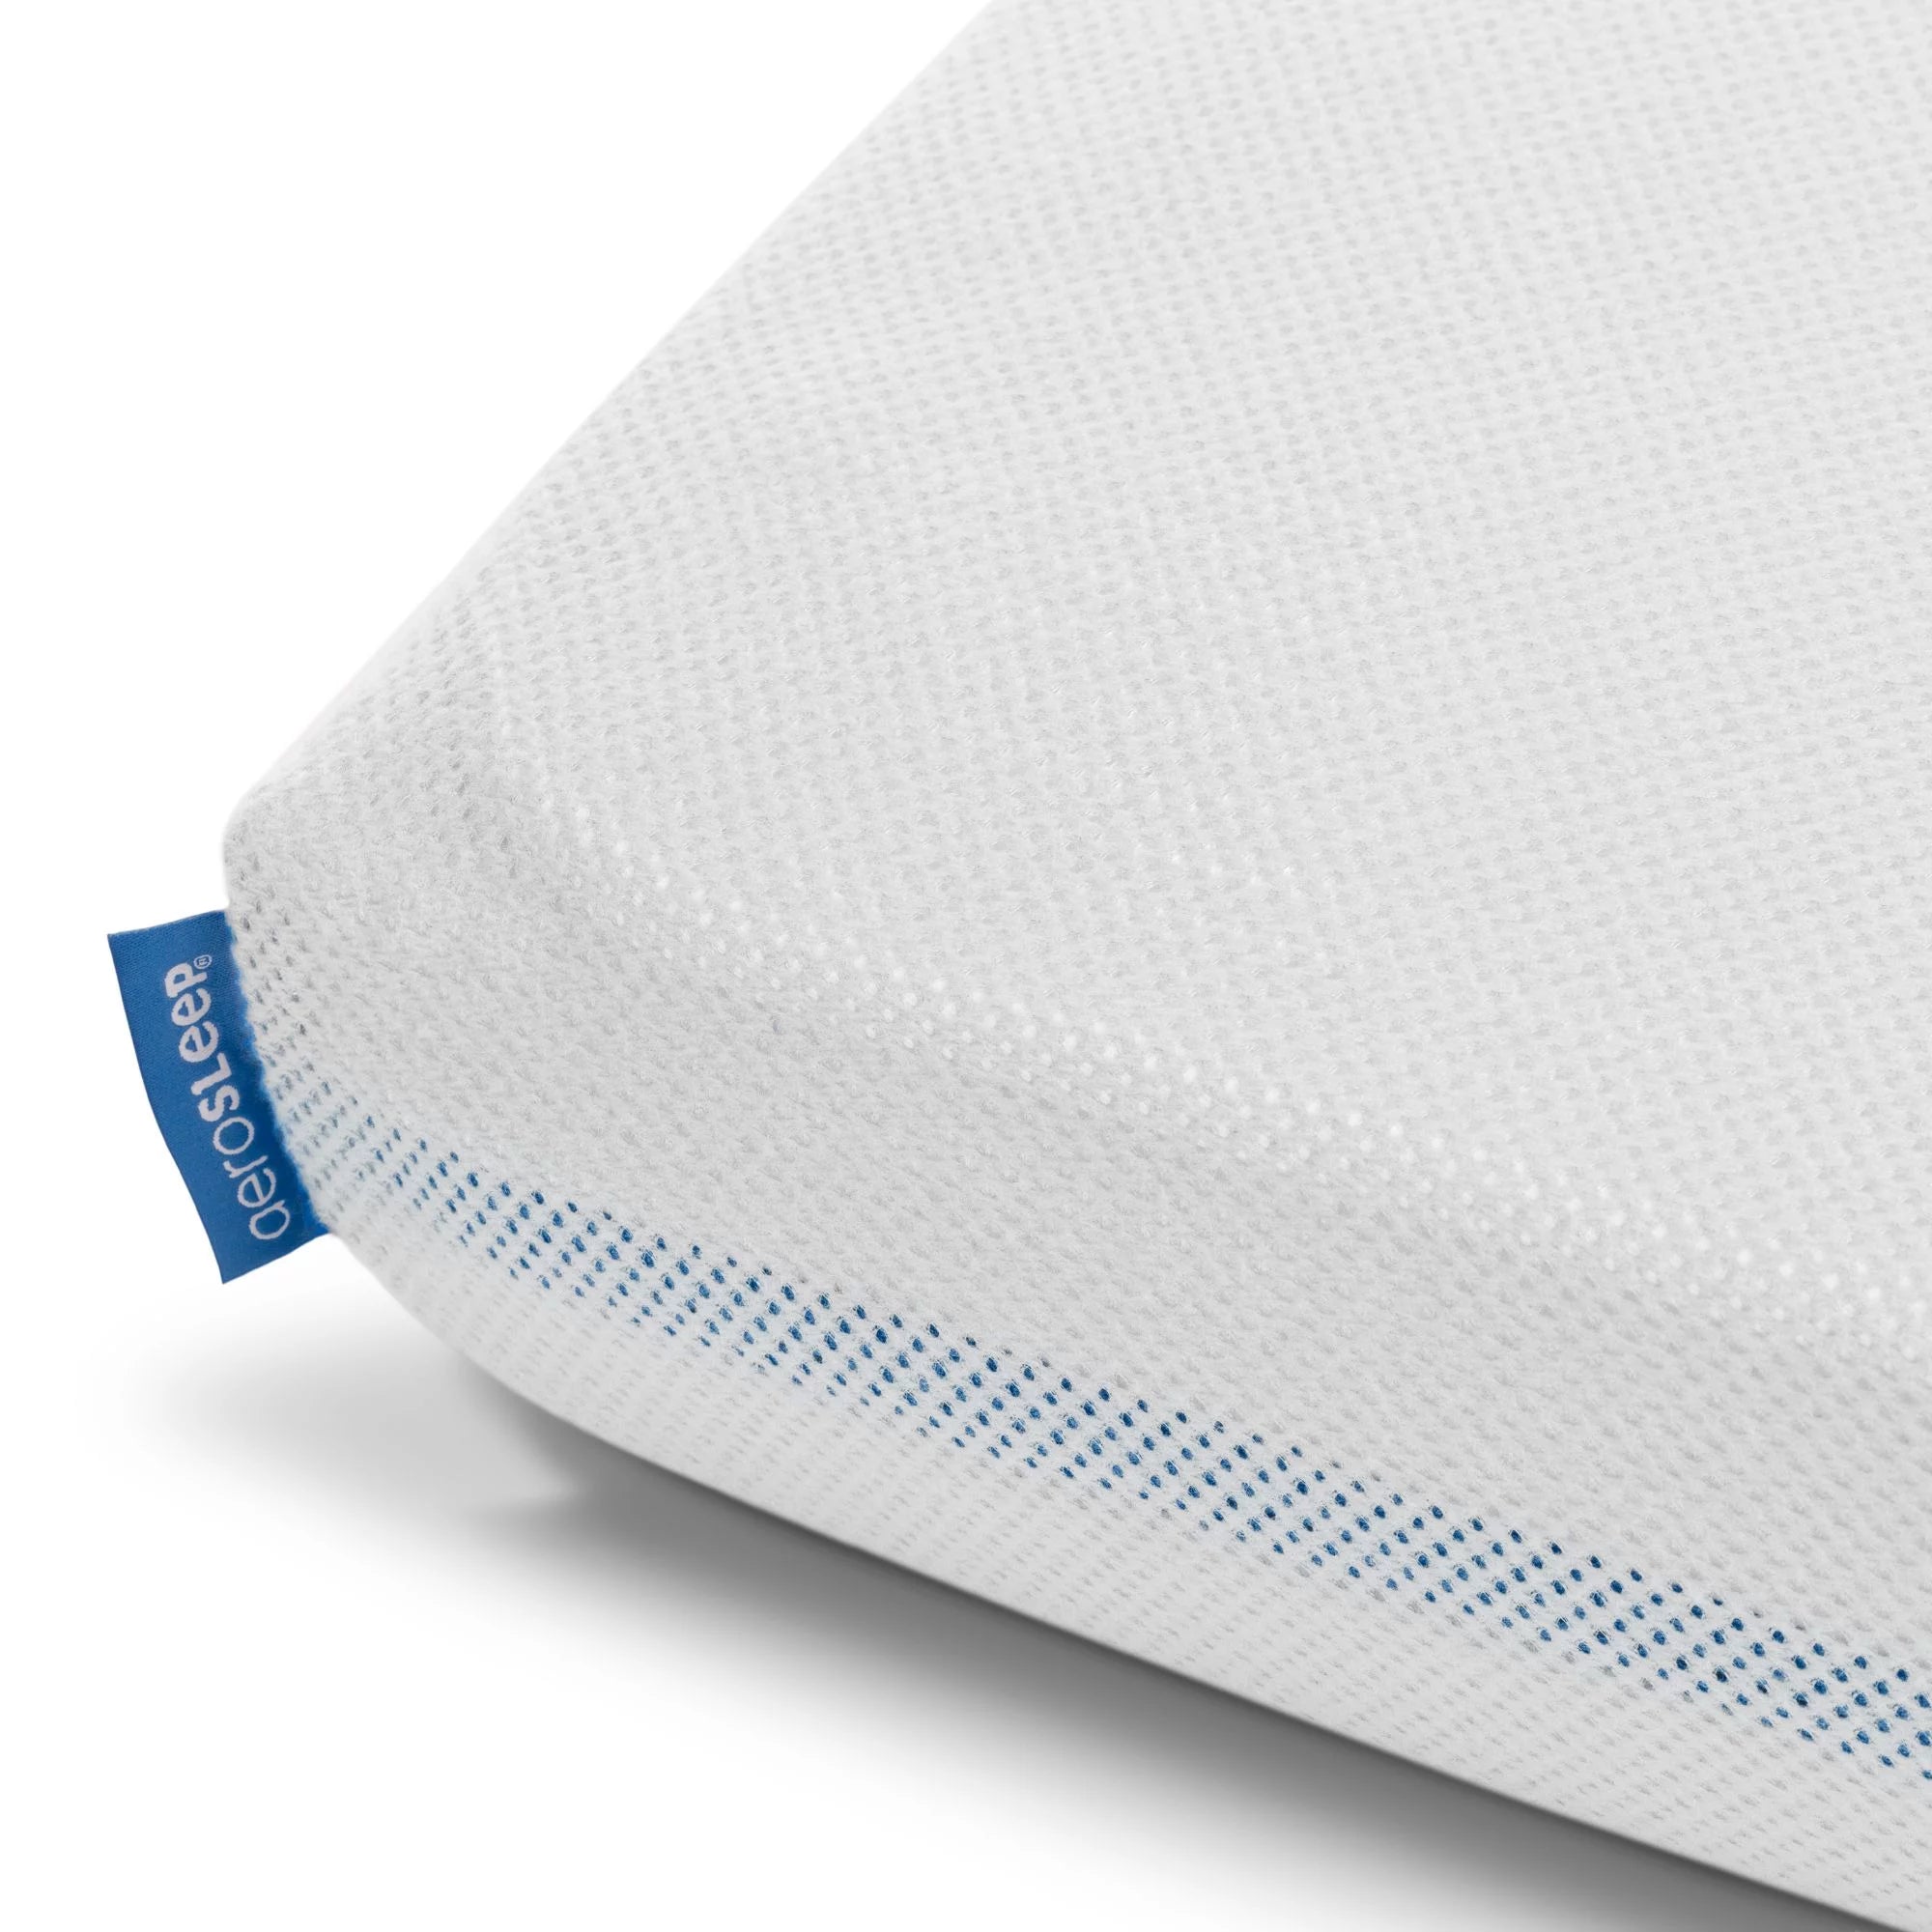 Aerosleep AeroSleep Sleep Safe Fitted Sheet 70x140 White / 70x140 - Hola BB